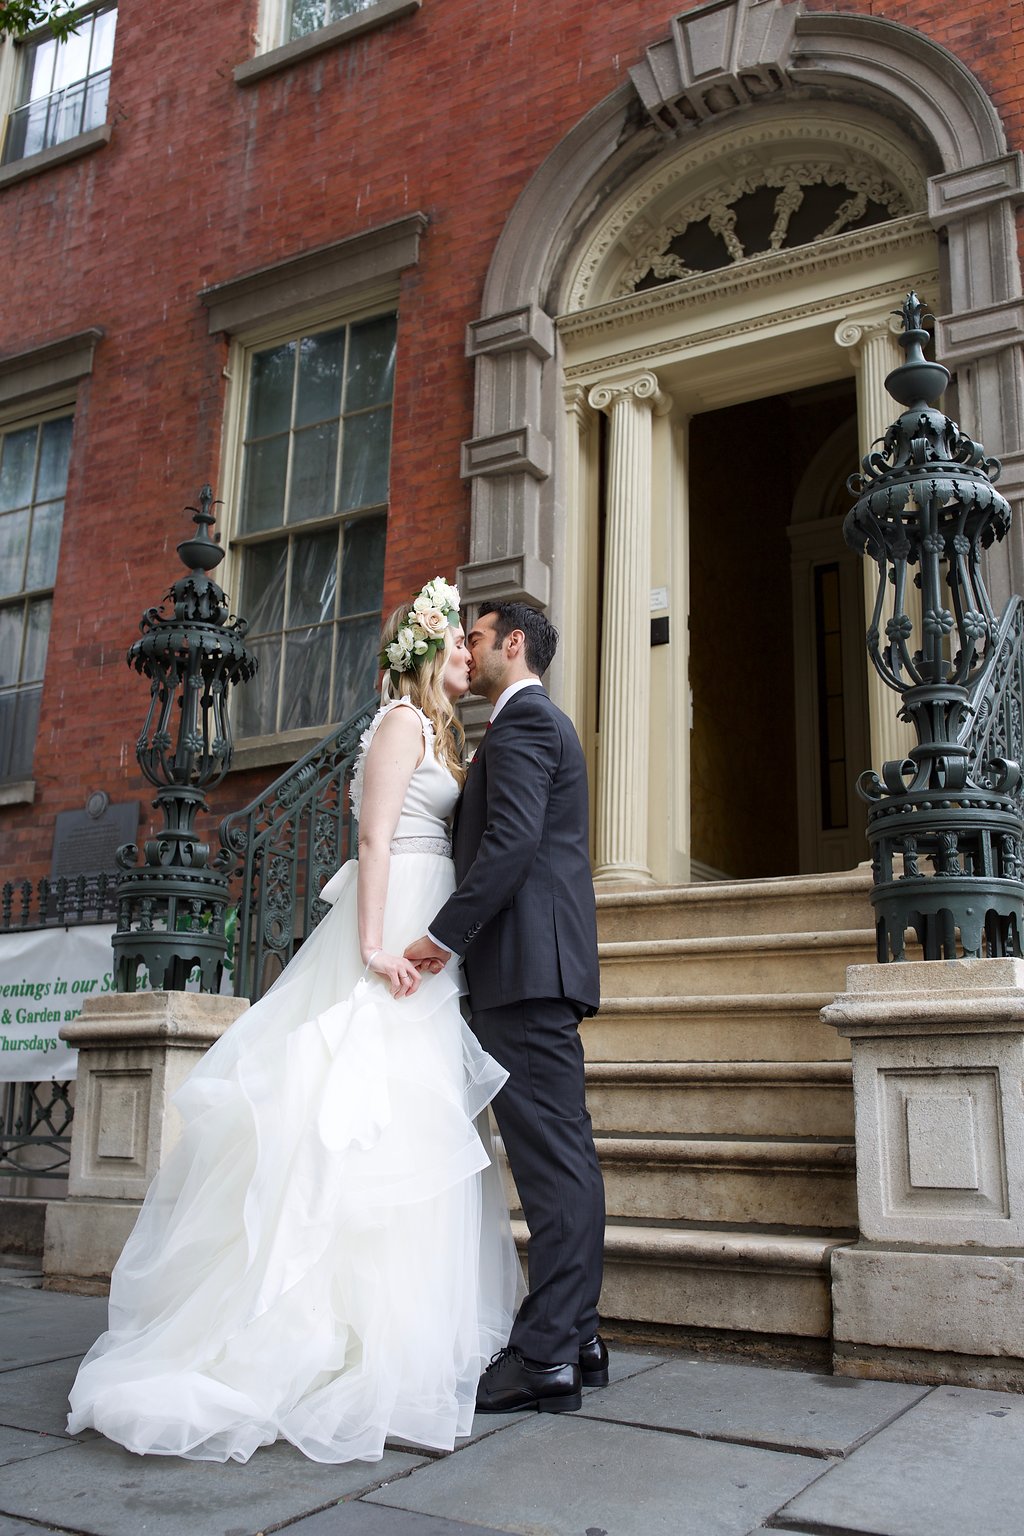 New York City wedding photographers Cinder & Co.